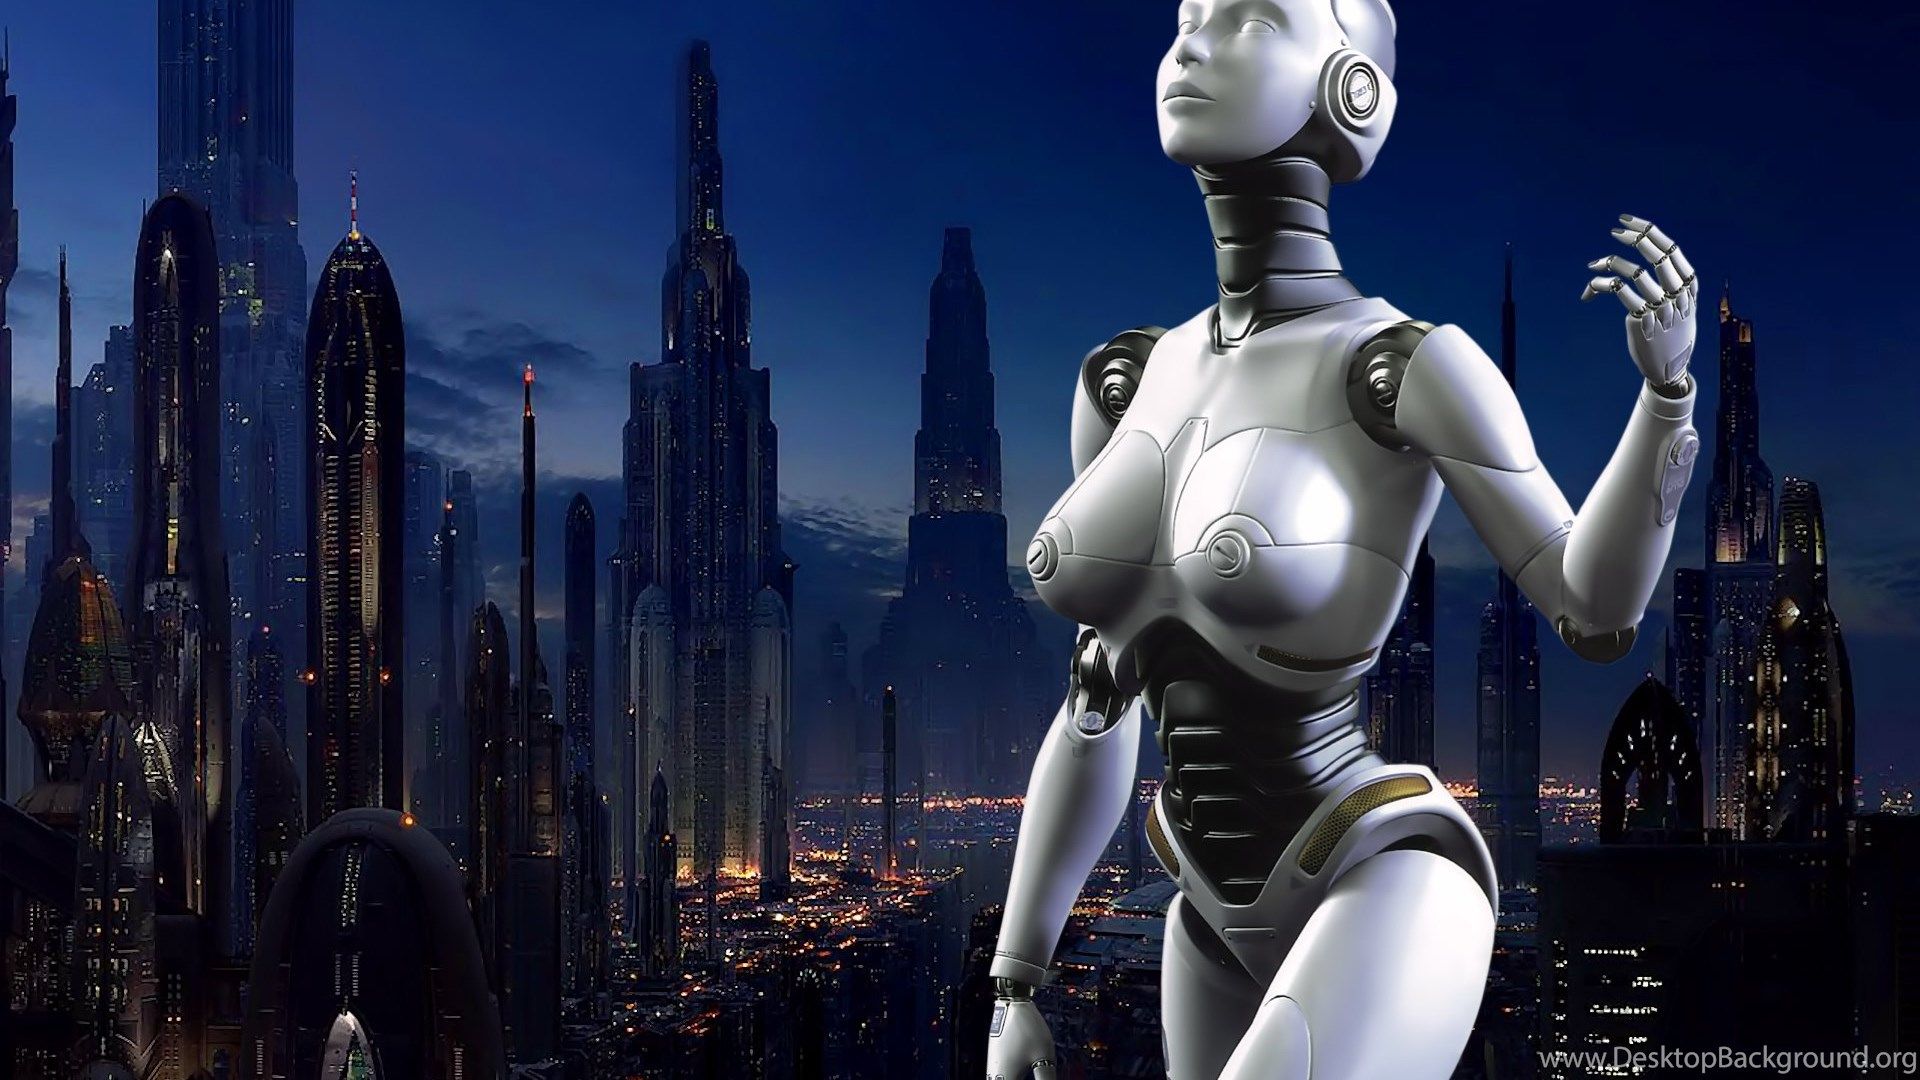 Woman Robot Wallpaper Desktop Background